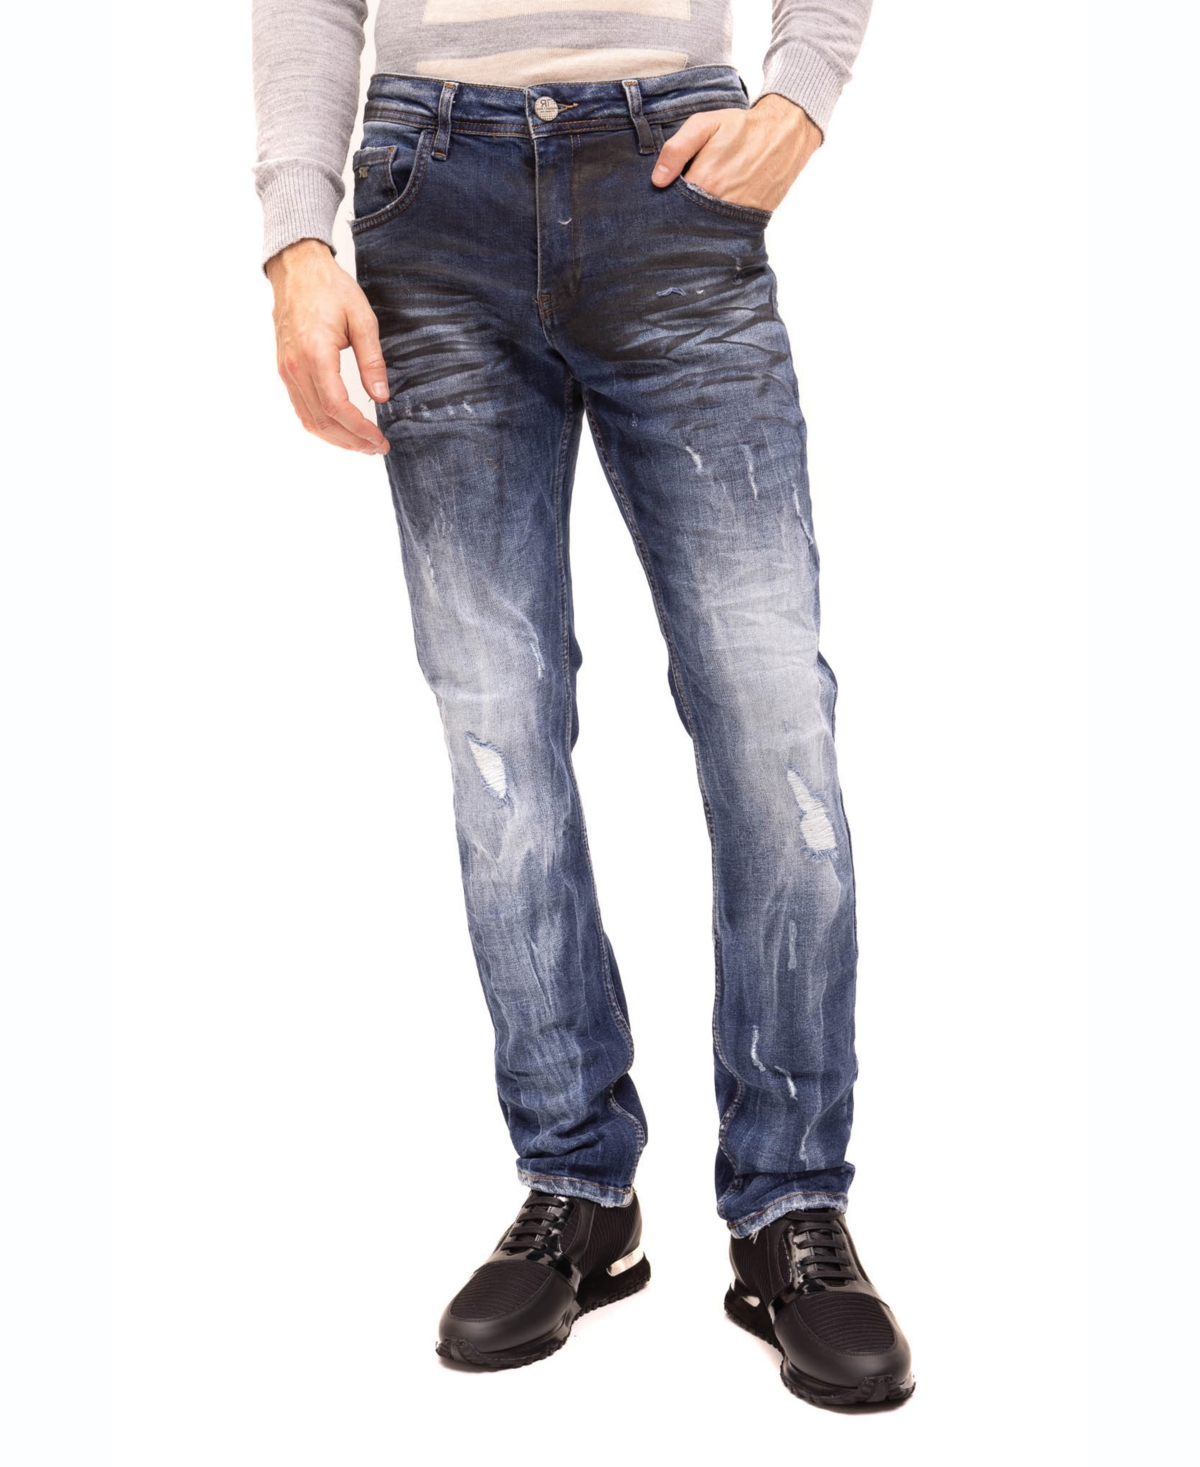 Men's Modern Oiled Denim Jeans - Indigo